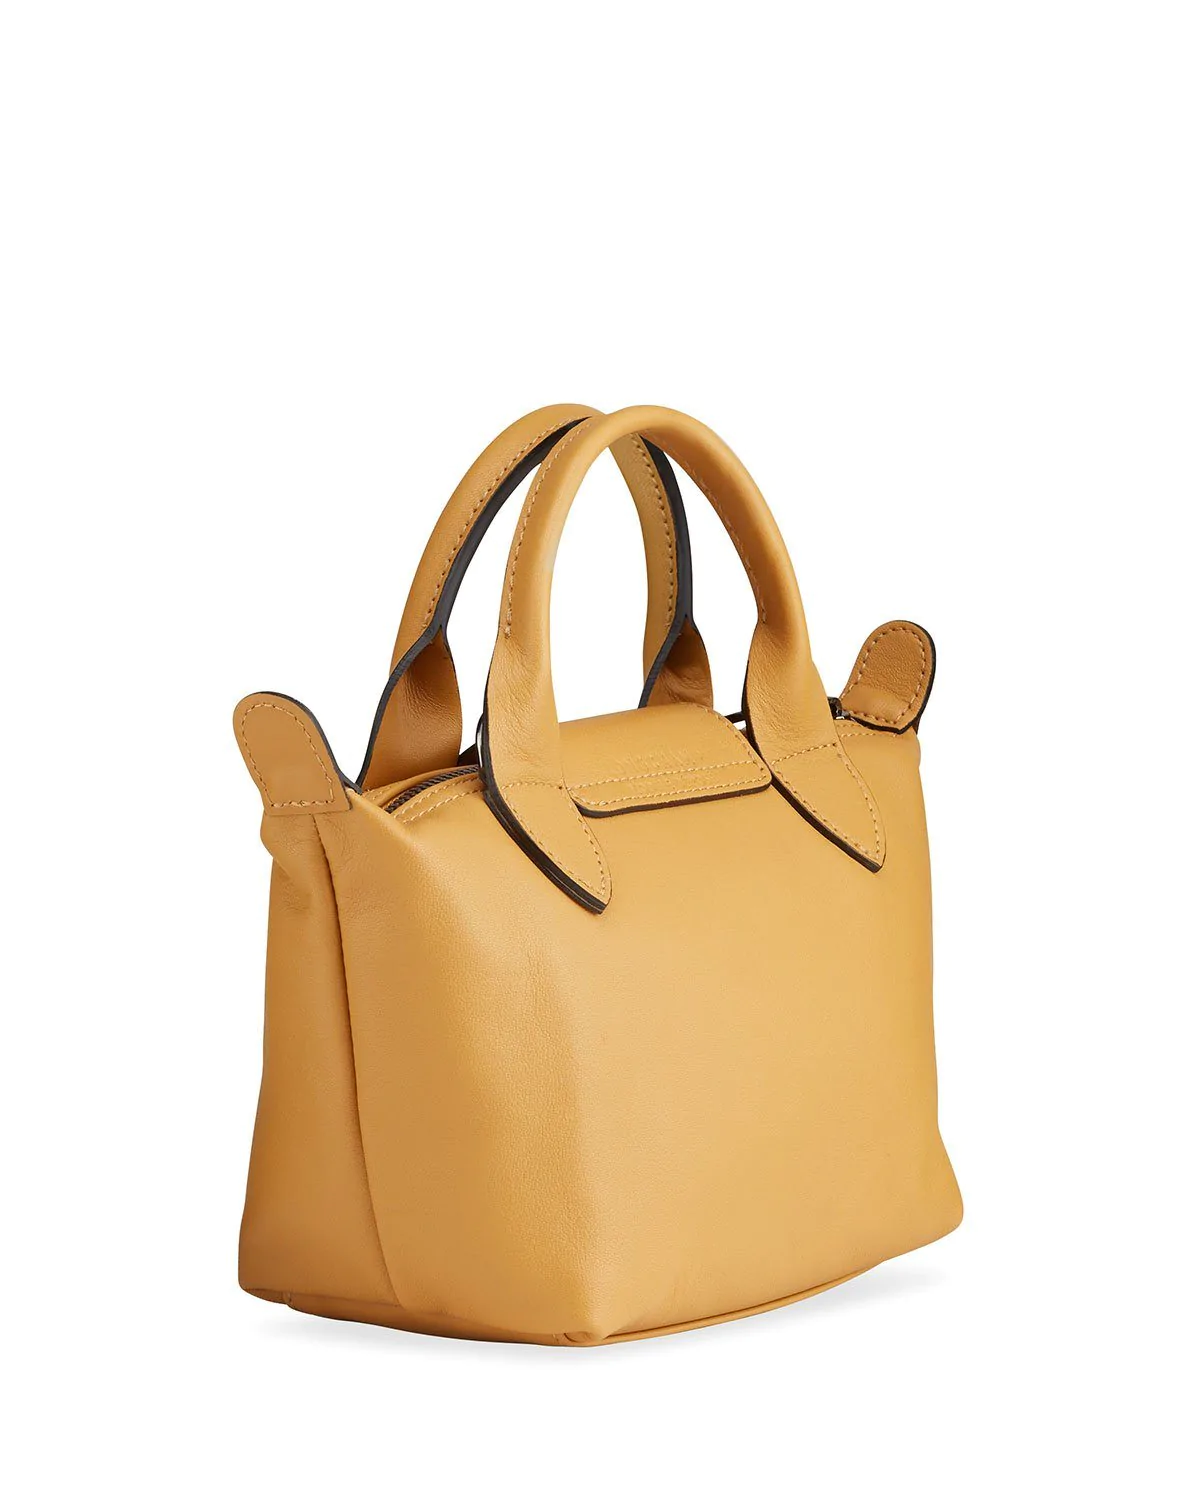 Longchamp Le Pliage Gold Leather Bag With Strap